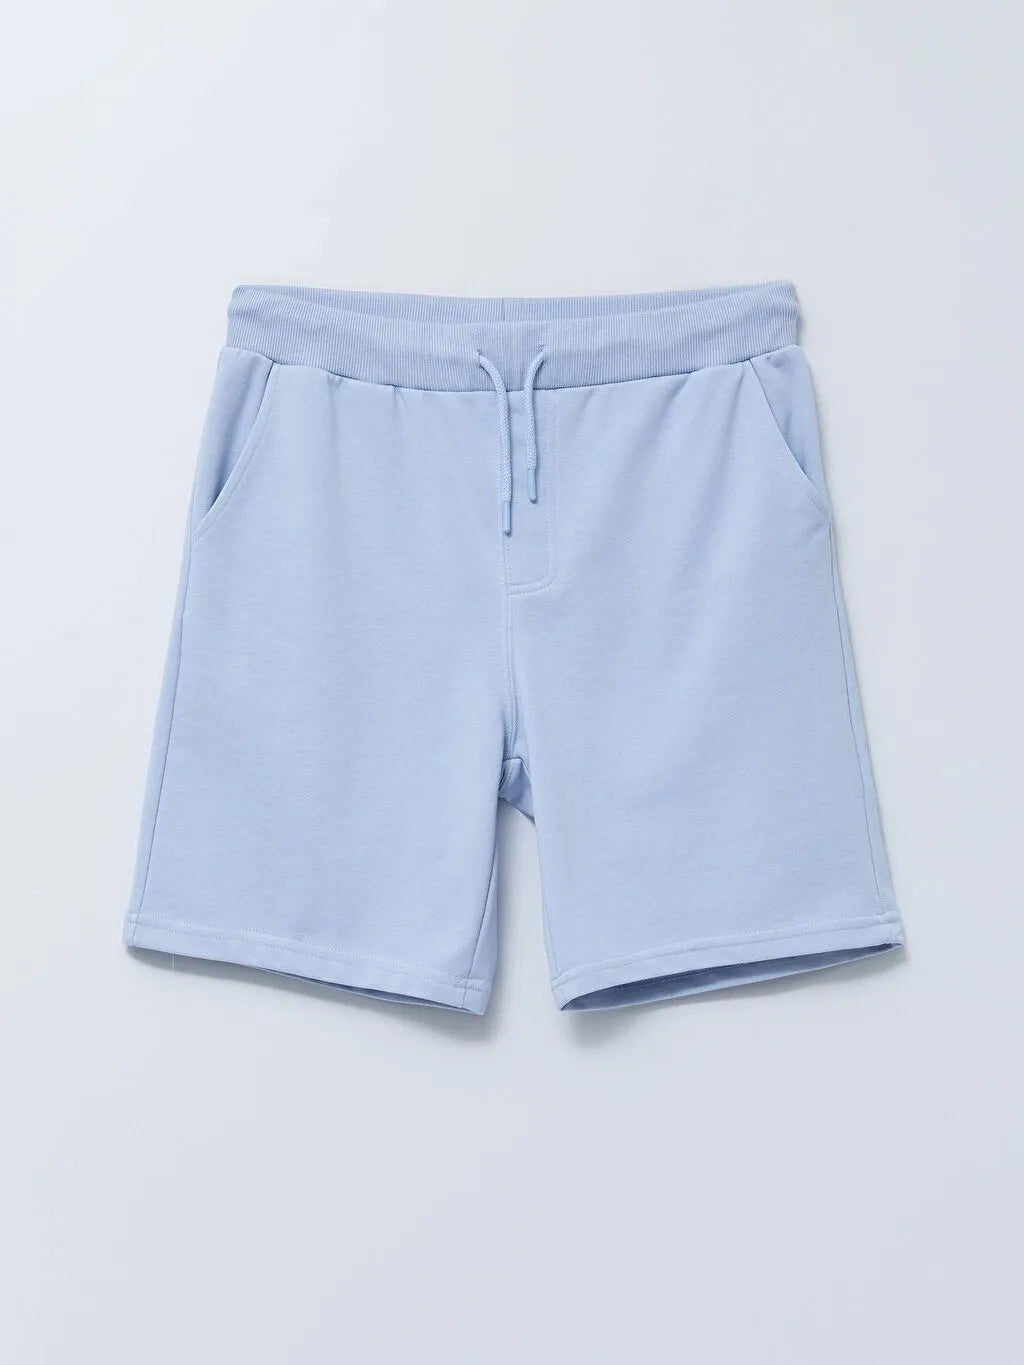 Xside Standard Pattern Knitted Men Shorts